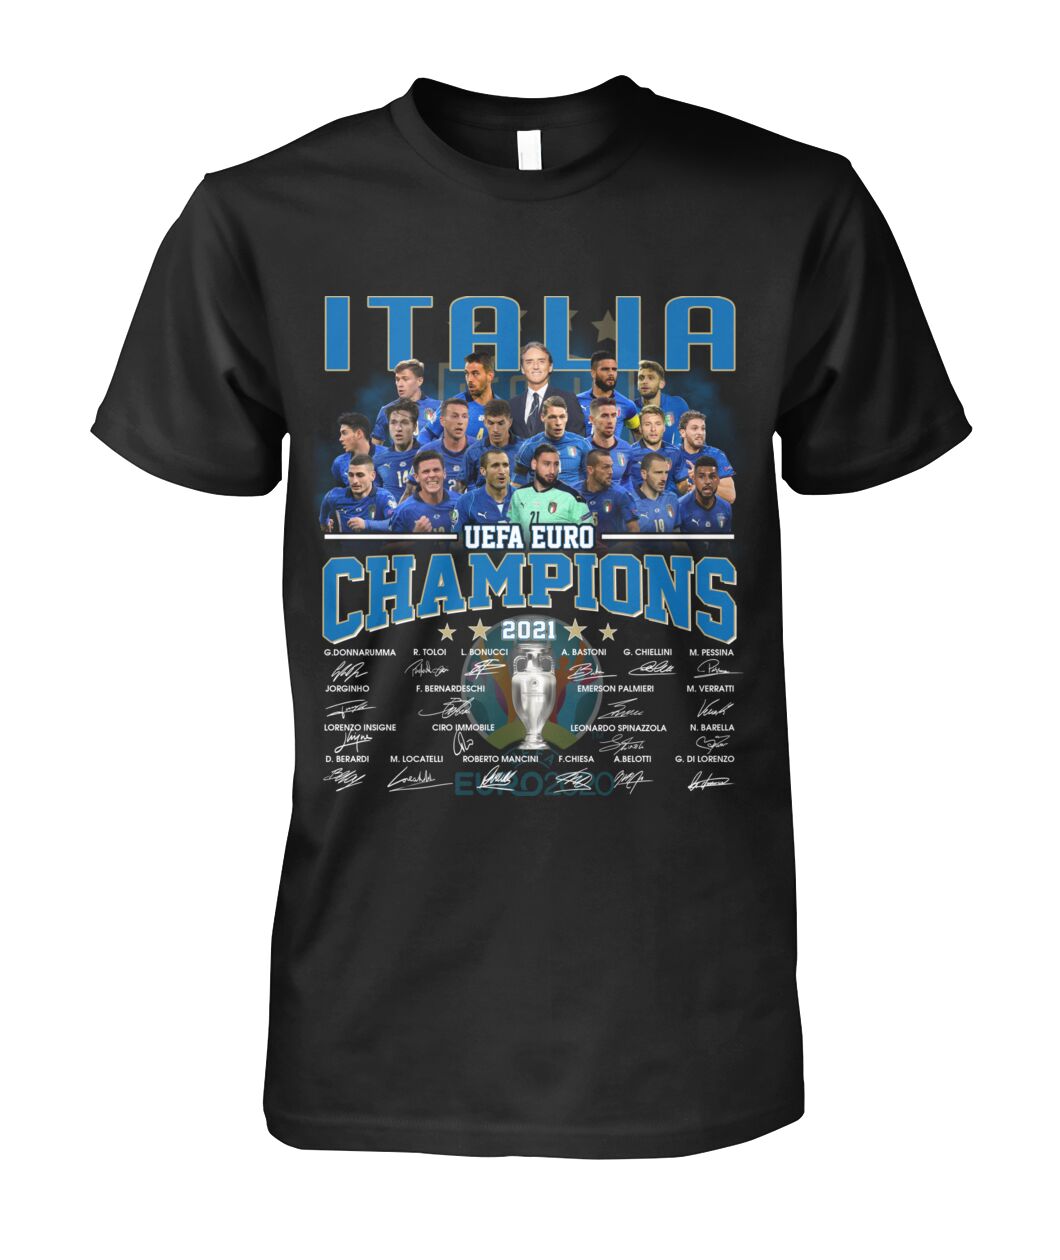 Italia UEFA EURO Champions 2021 Shirt